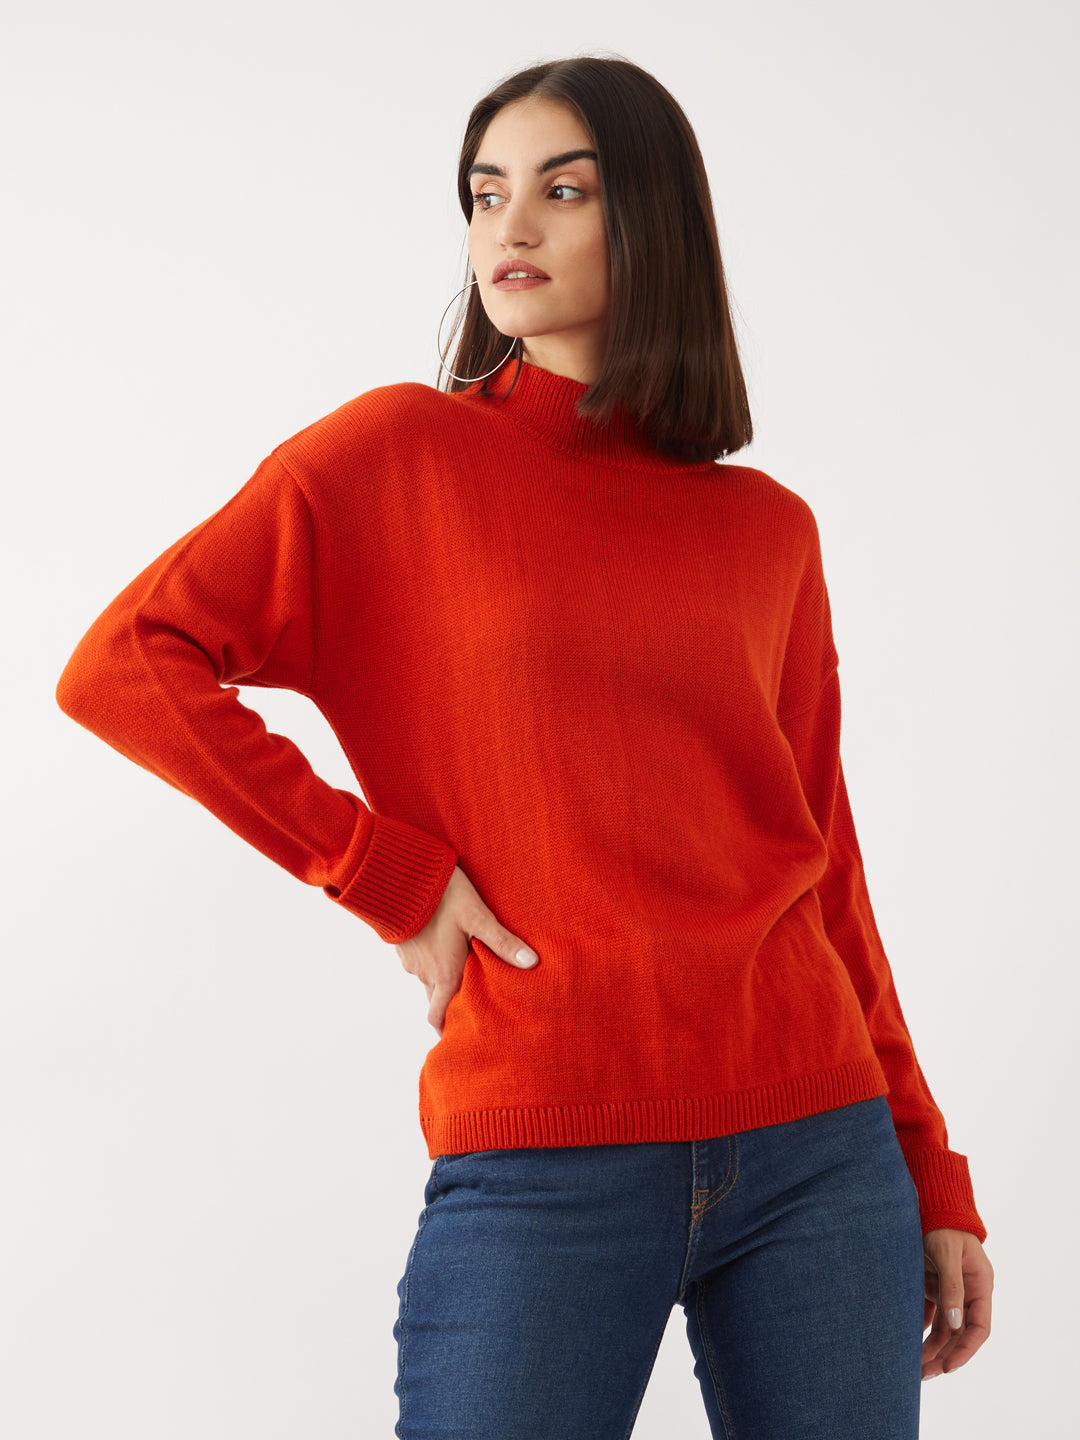 Orange Solid Sweater For Women